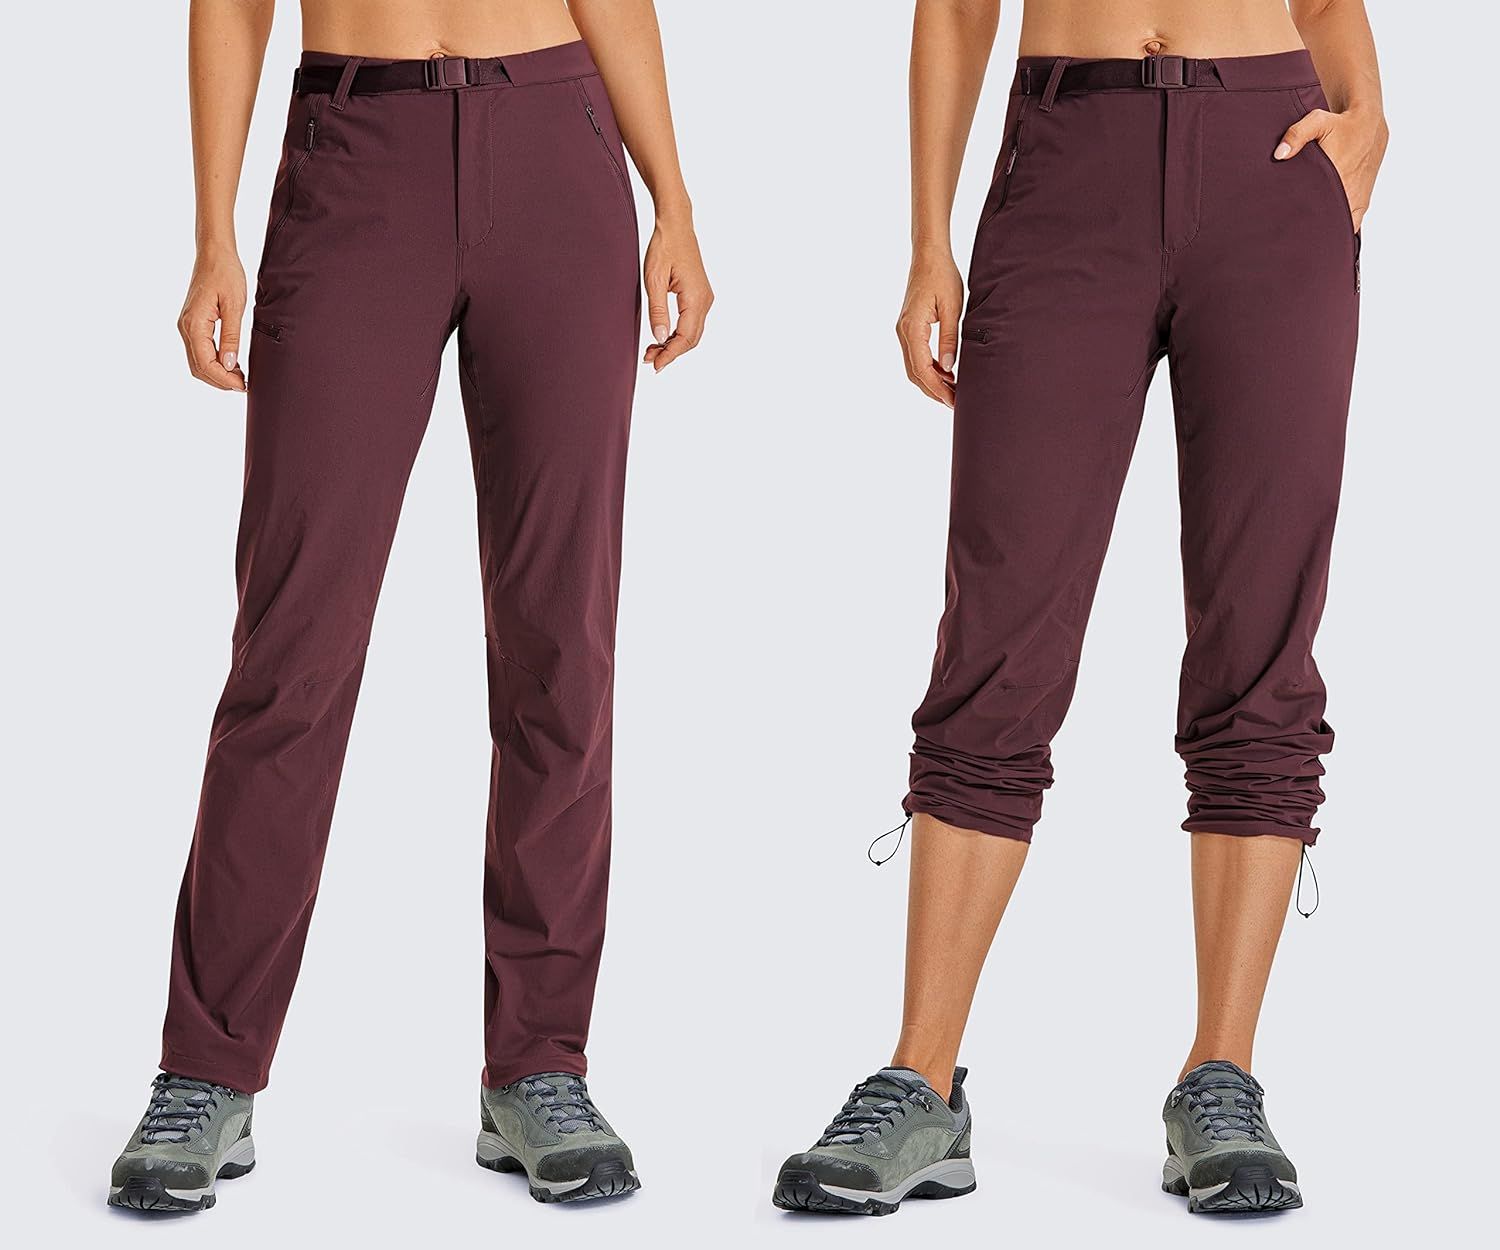 CRZ YOGA Stretch Hiking Pants Women - Waterproof UPF 50 Tactical Pants Quick Dry Outdoor Fishing Tra | Amazon (US)